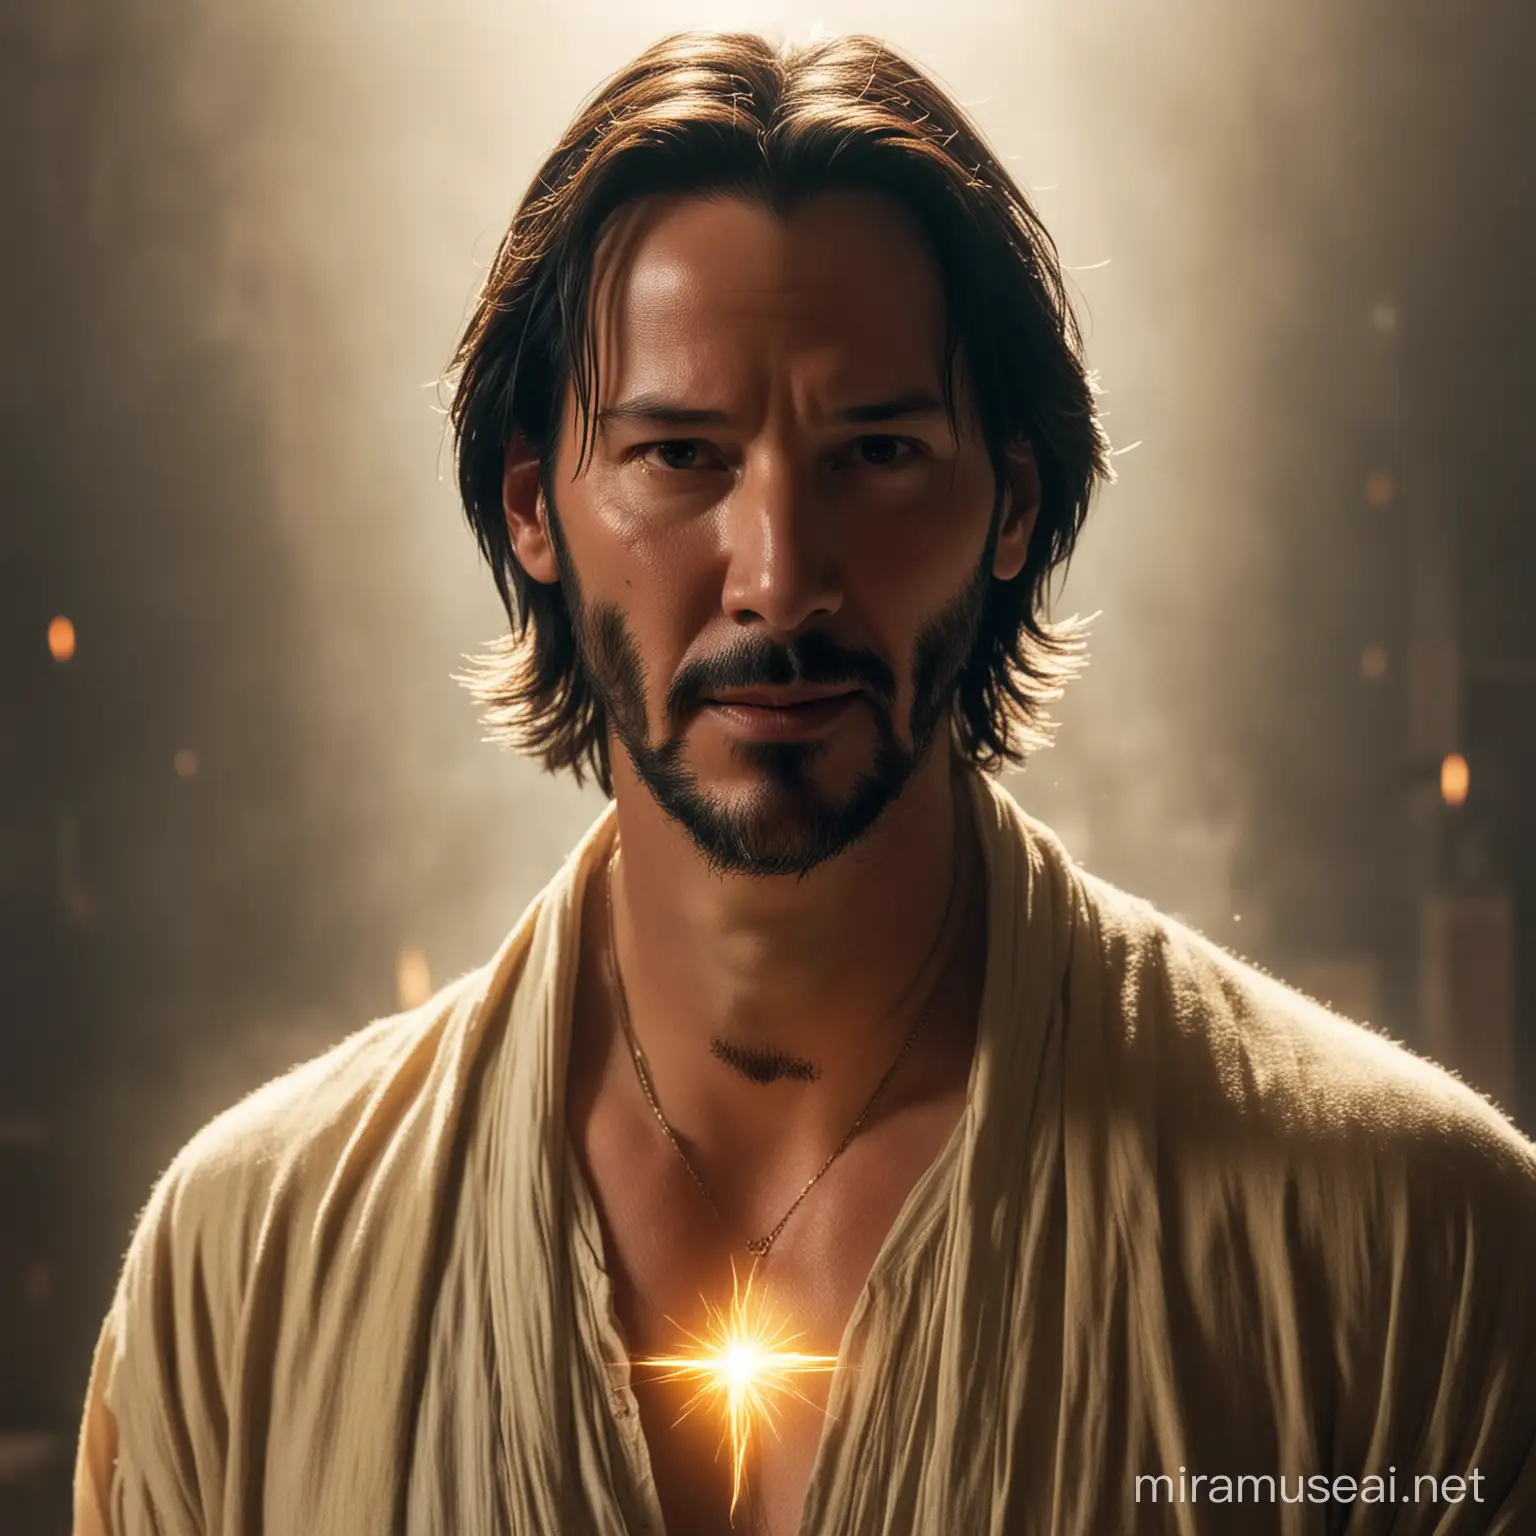 Keanu Reeves Embracing Divinity in Ethereal Glow